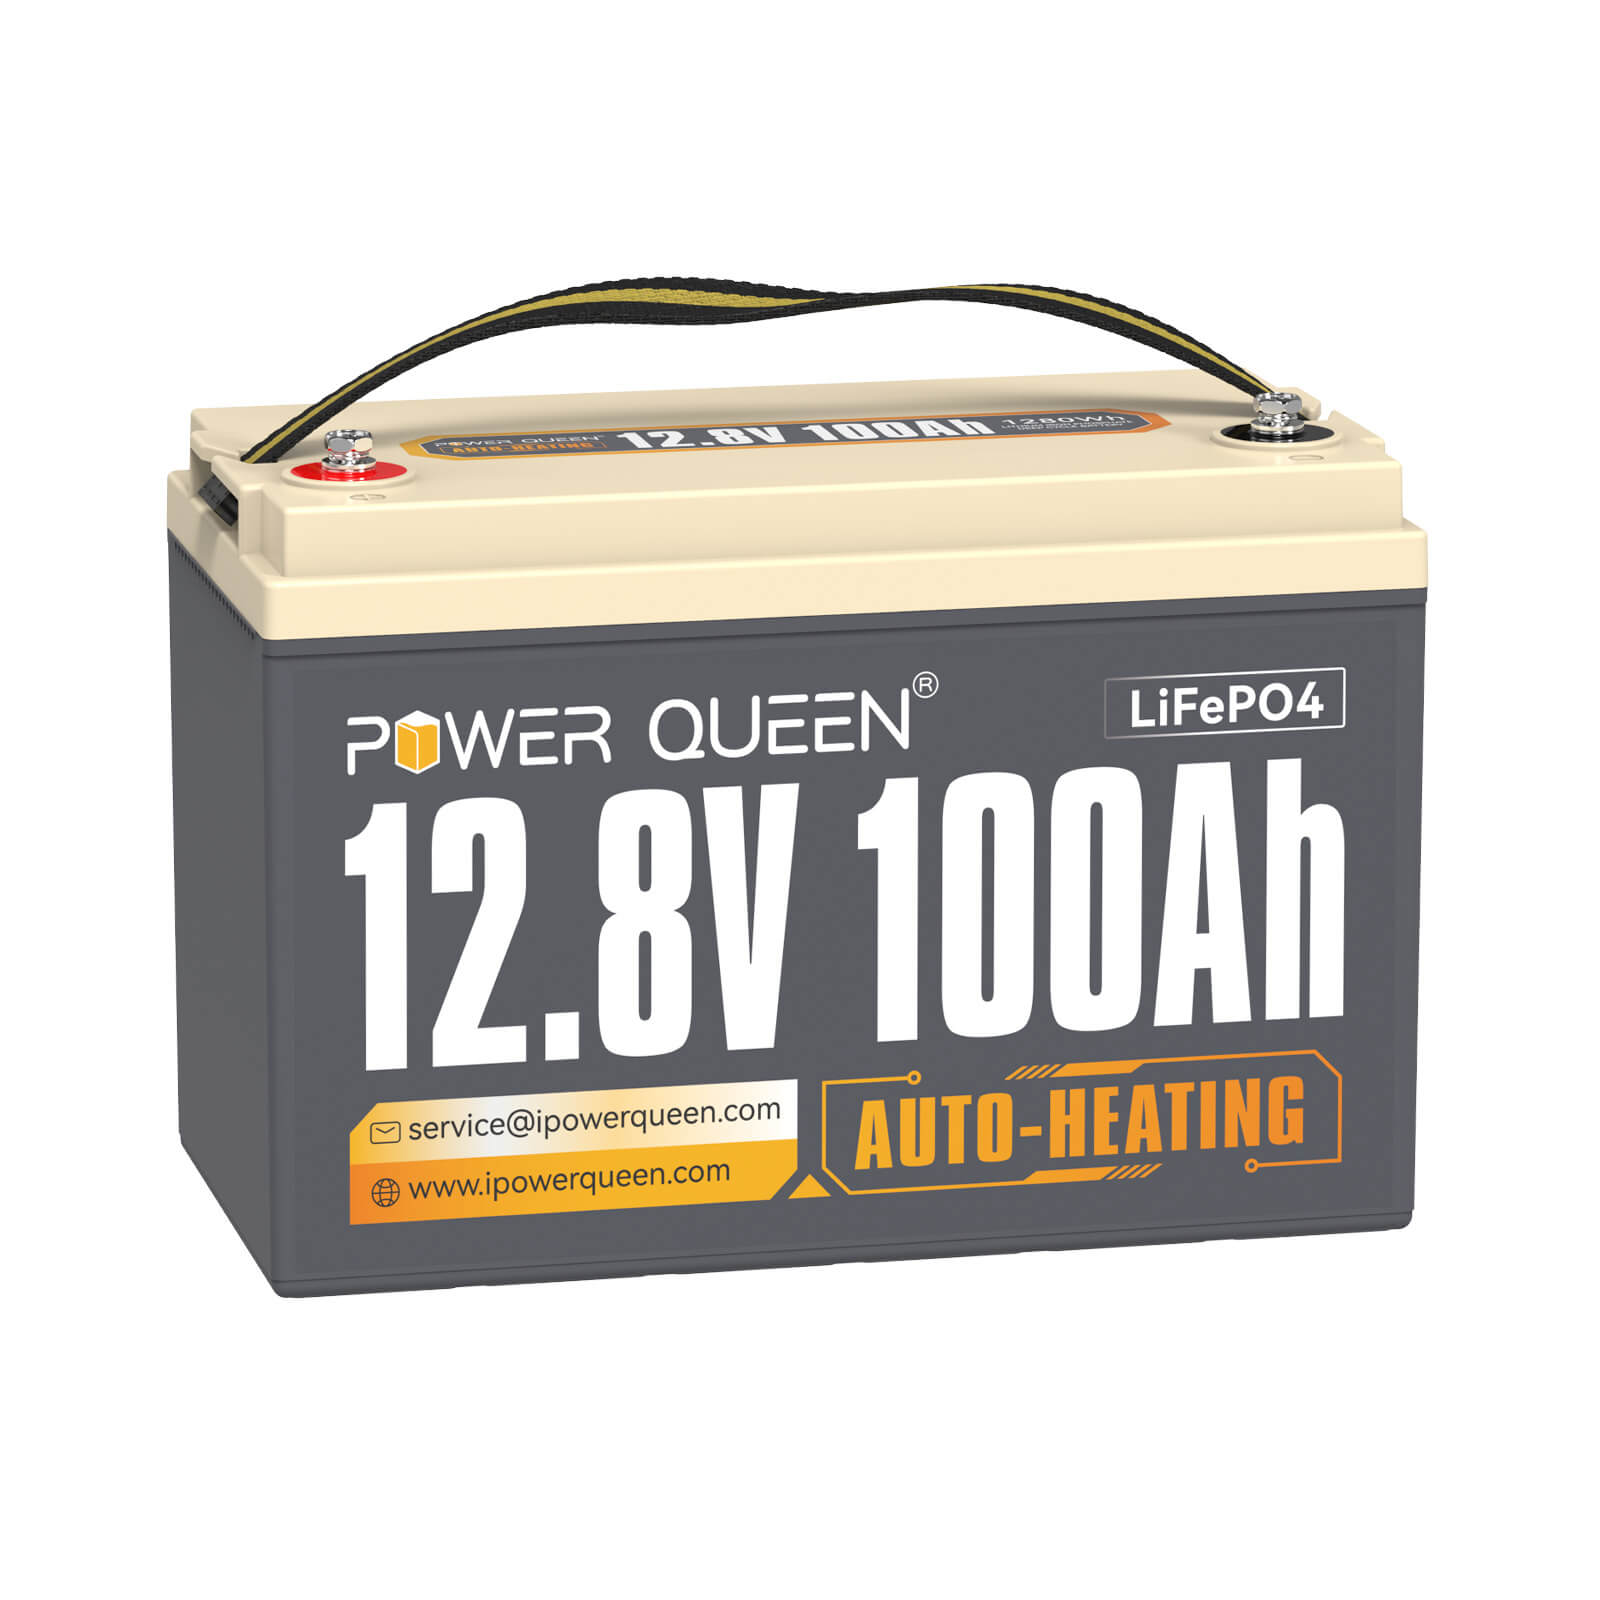 Come nuovo: batteria LiFePO4 autoriscaldante Power Queen 12,8 V 100 Ah, BMS 100 A integrato